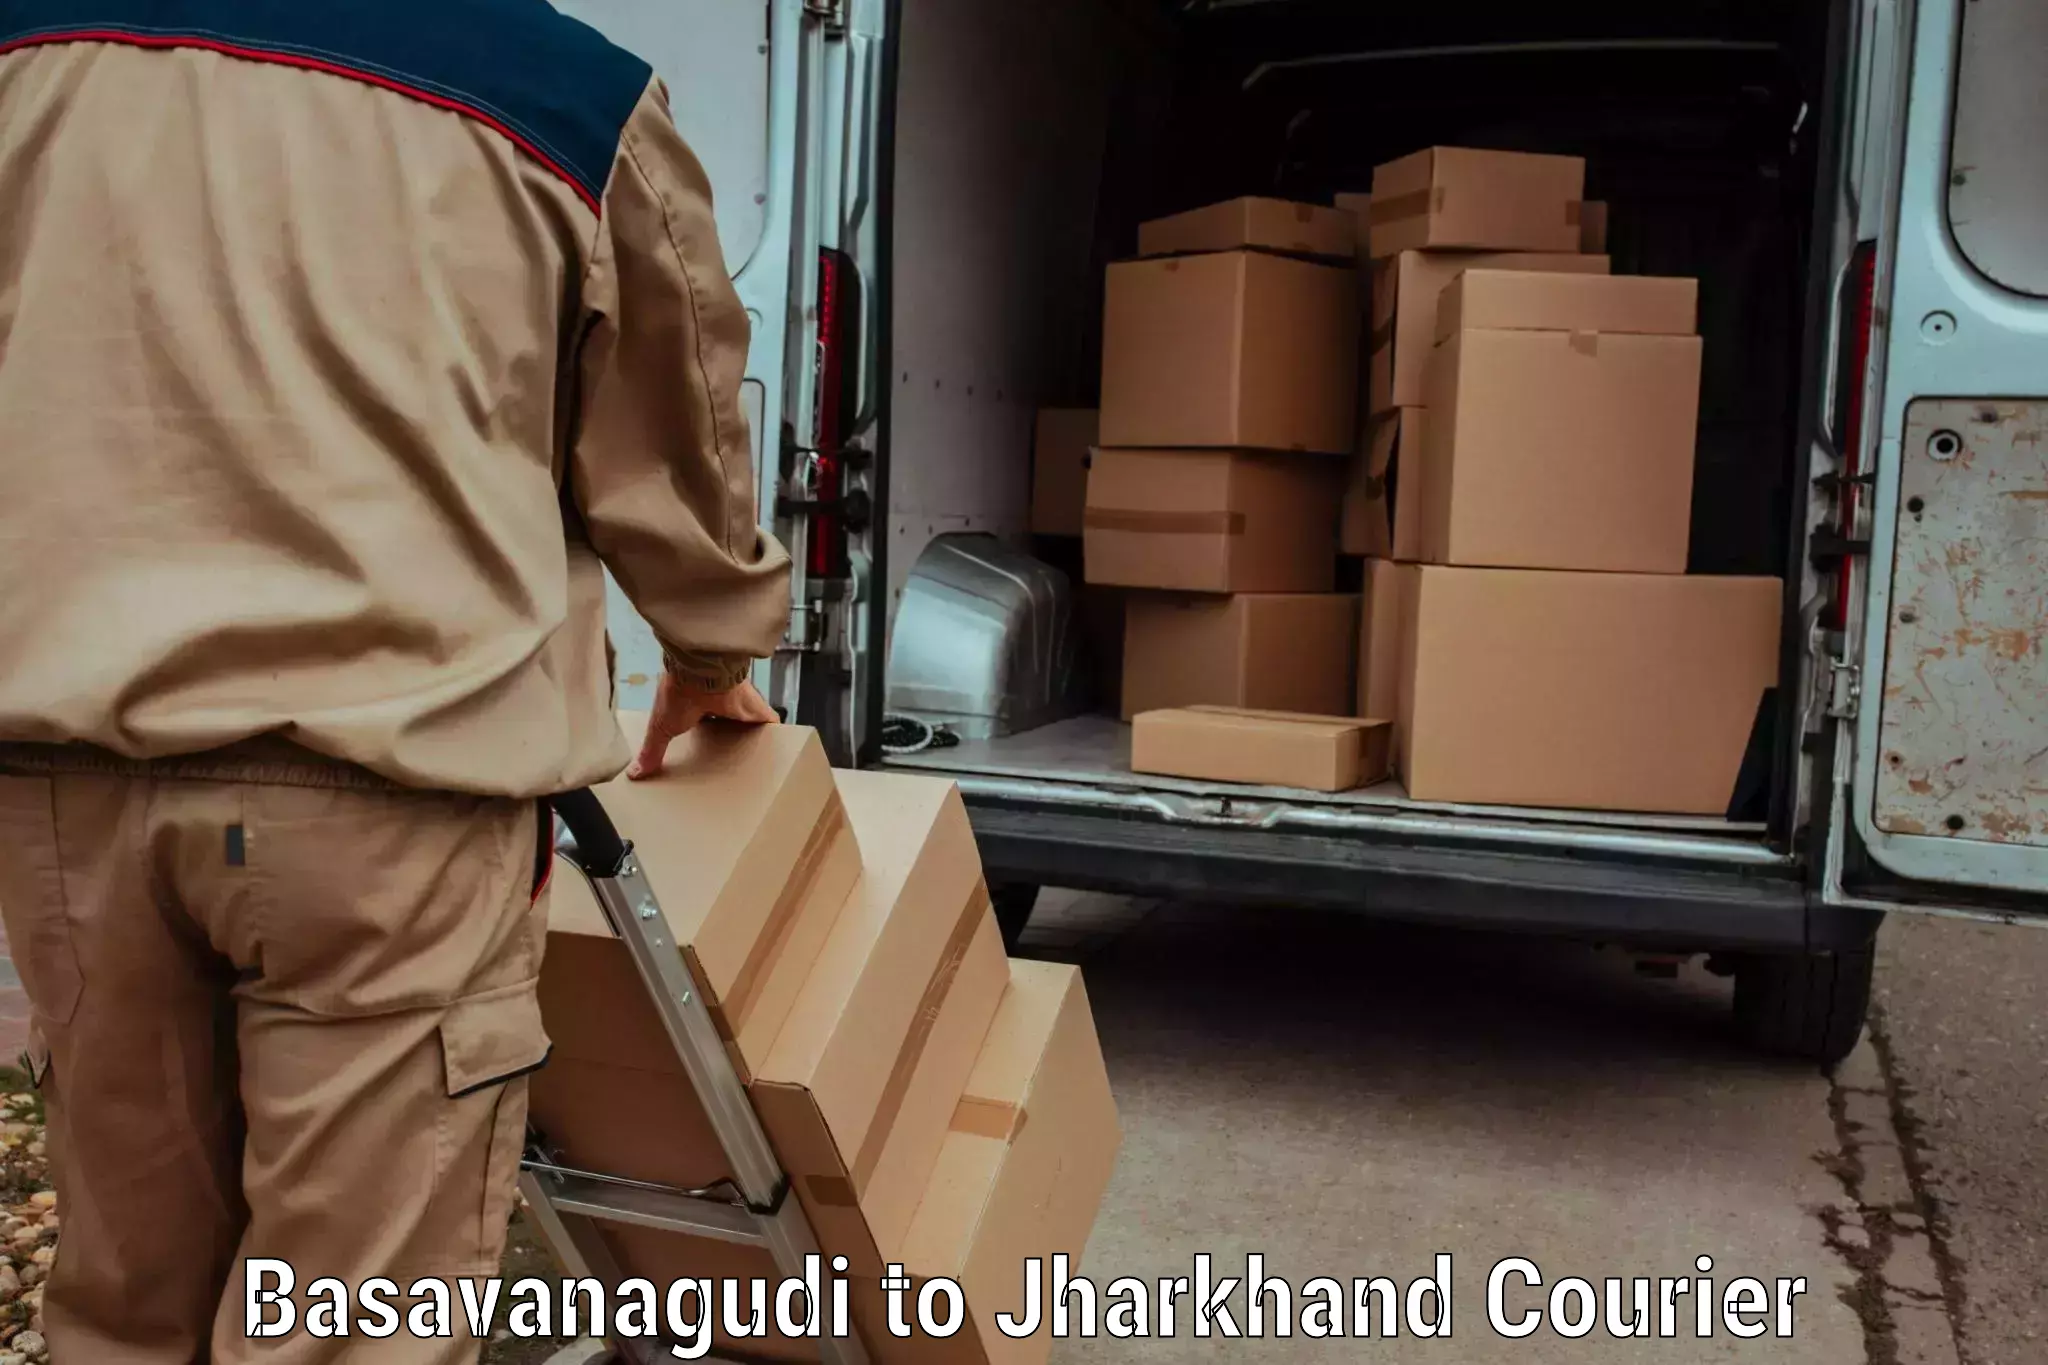 Express package delivery in Basavanagudi to Adityapur